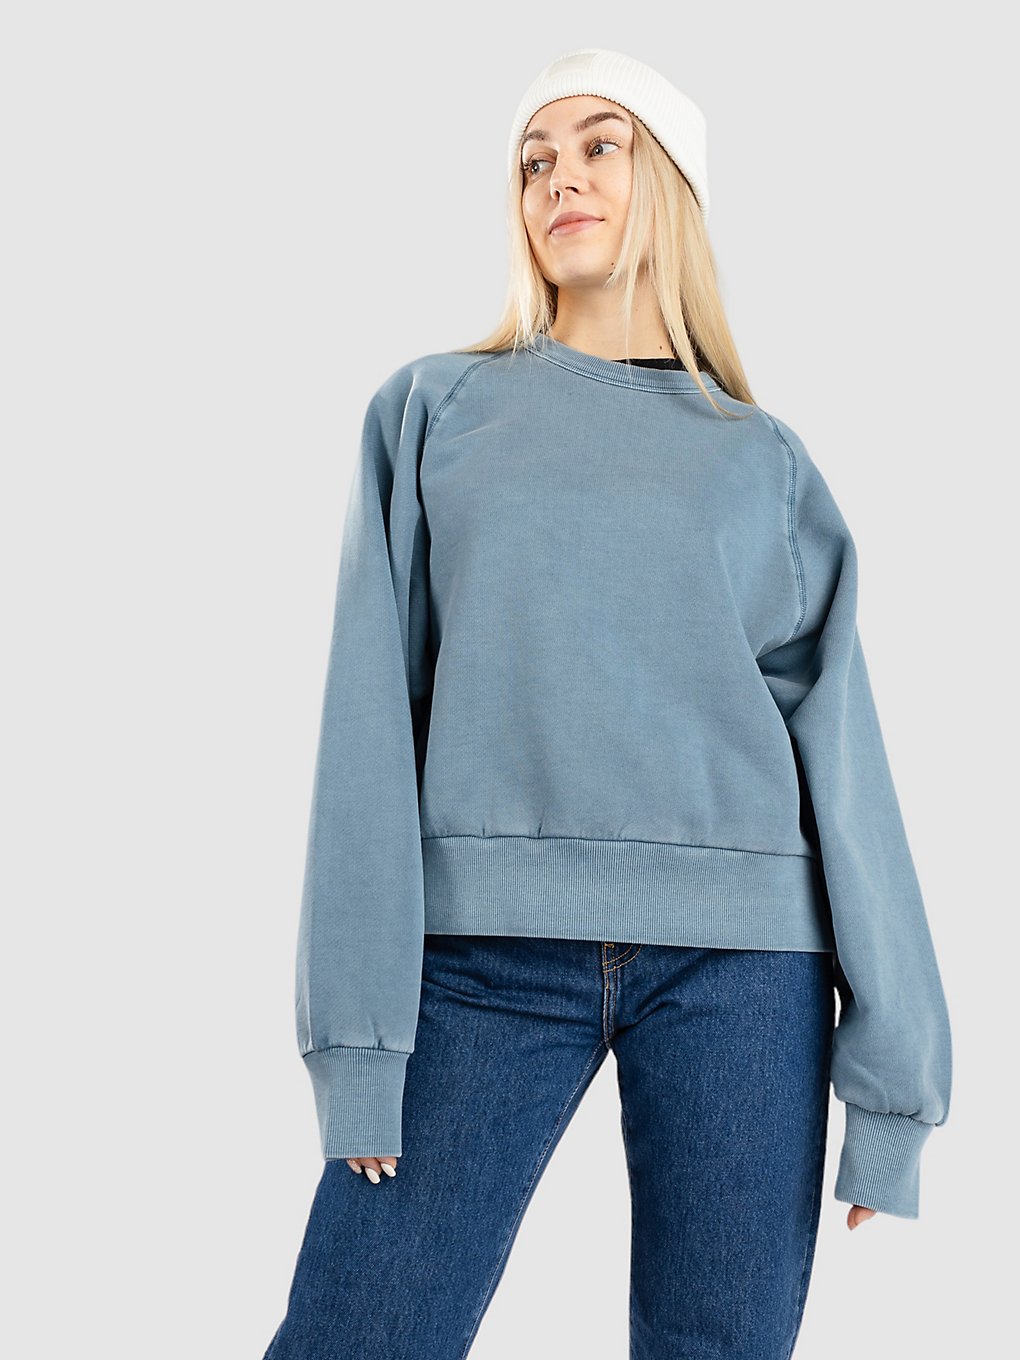 Carhartt WIP Taos Sweater vancouver blue garment dy kaufen